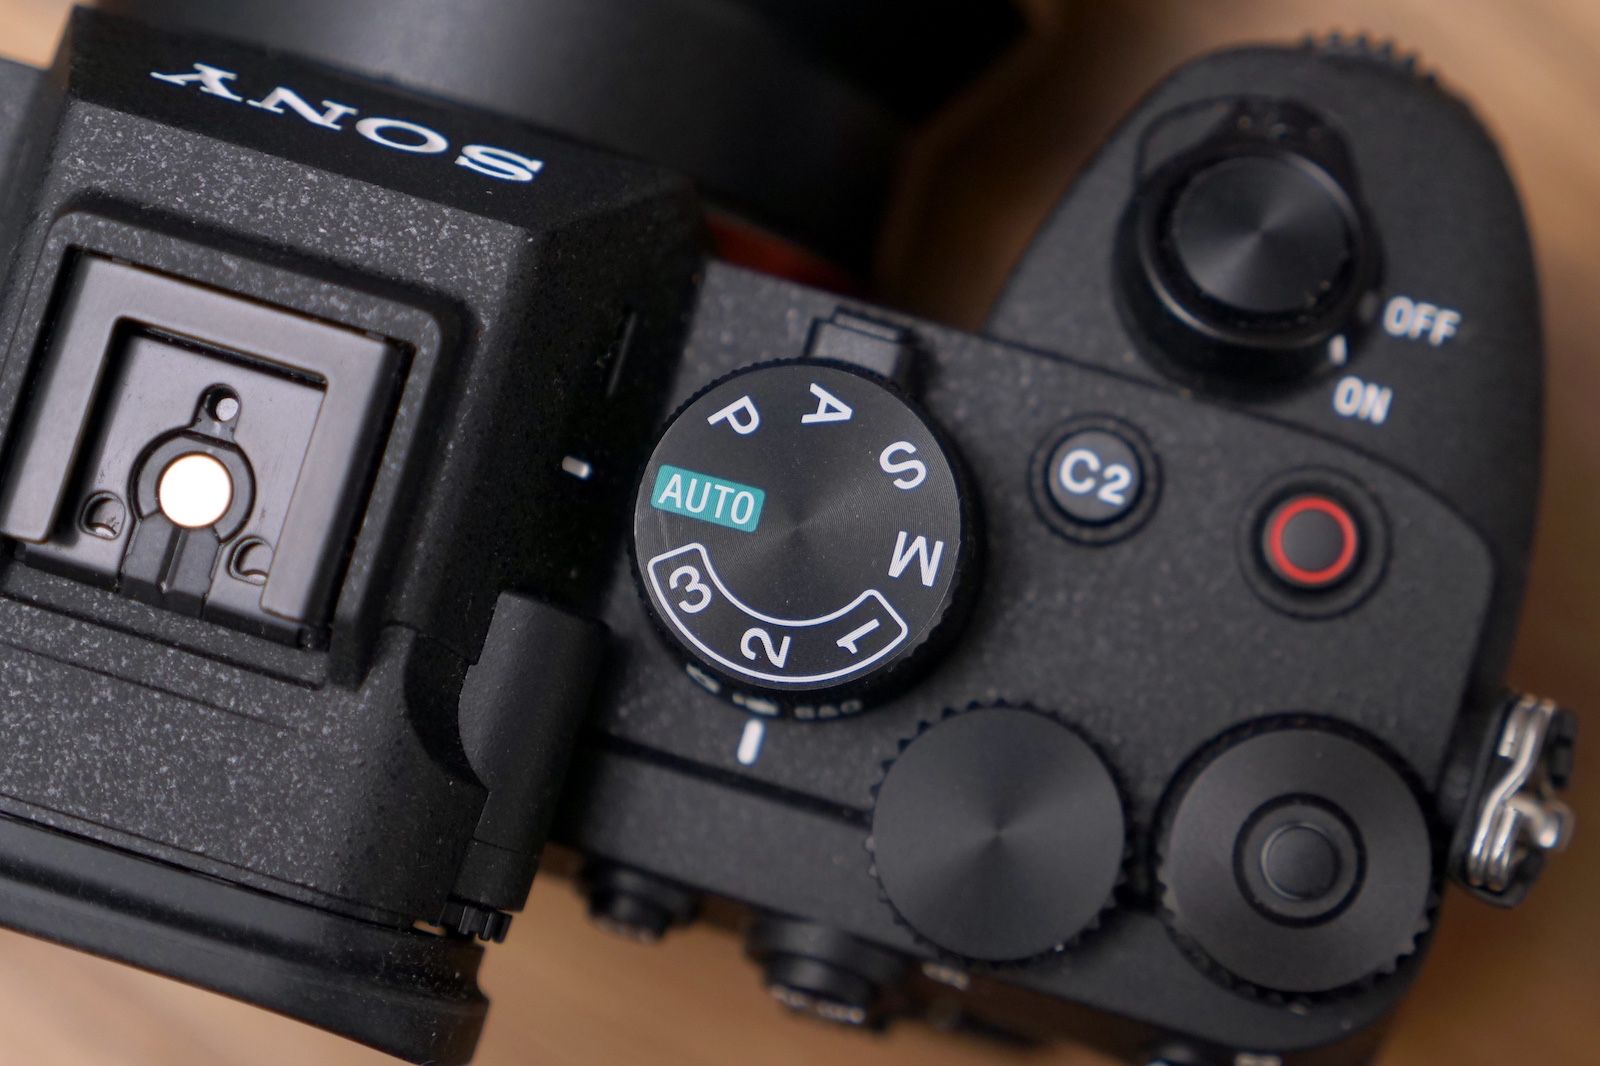 Qué cámara comprar?: Sony A7 IV, A7C o A7 III